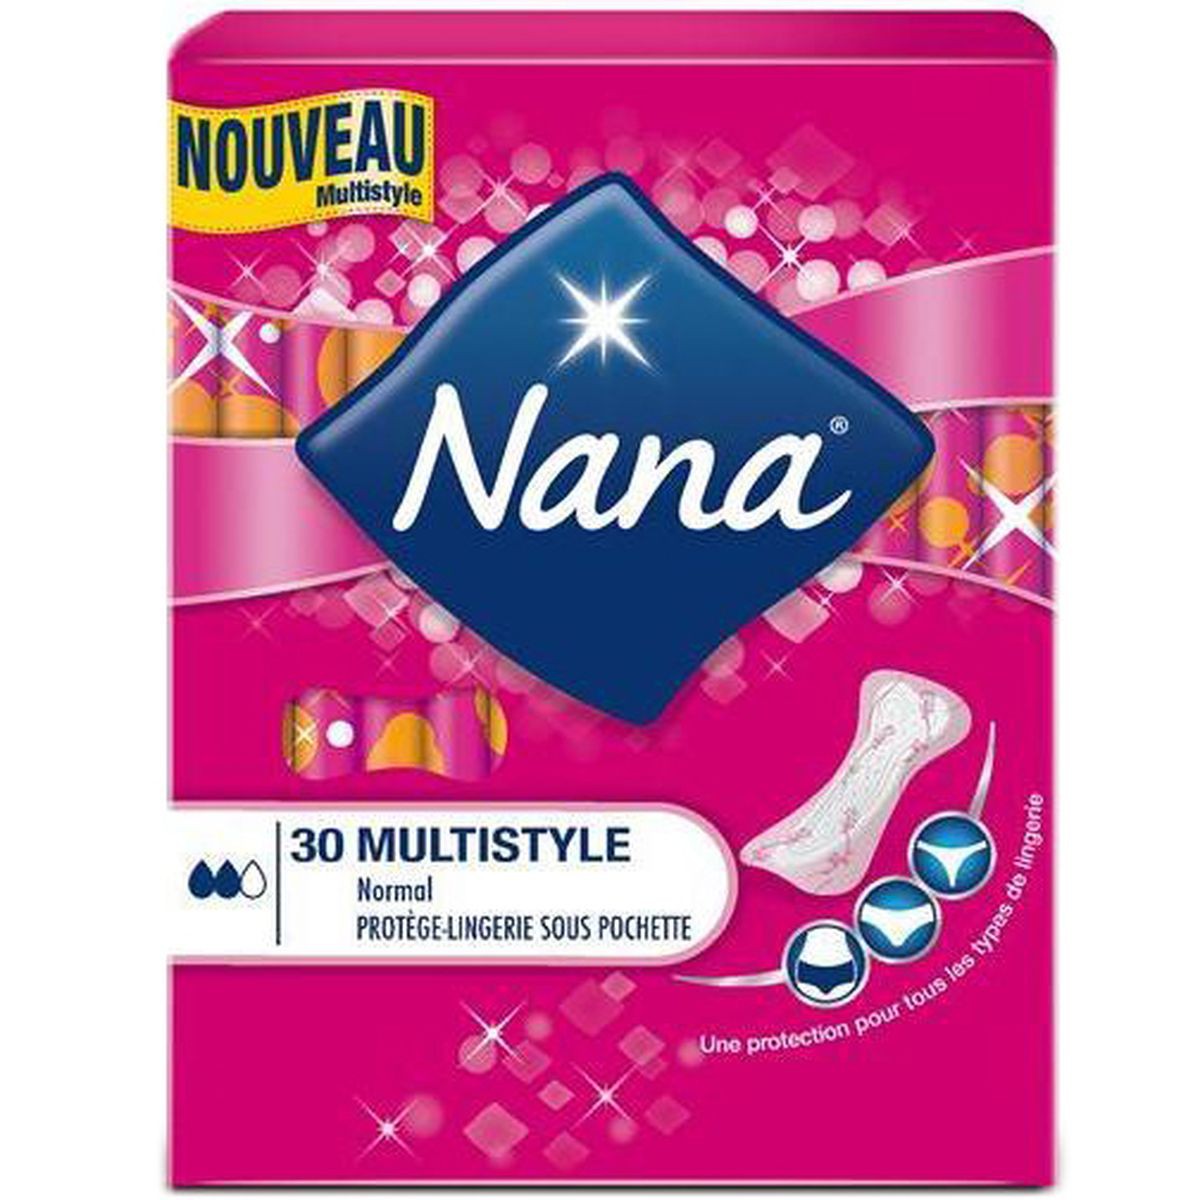 NANA Nana protège lingerie normal multistyle x60 pas cher 